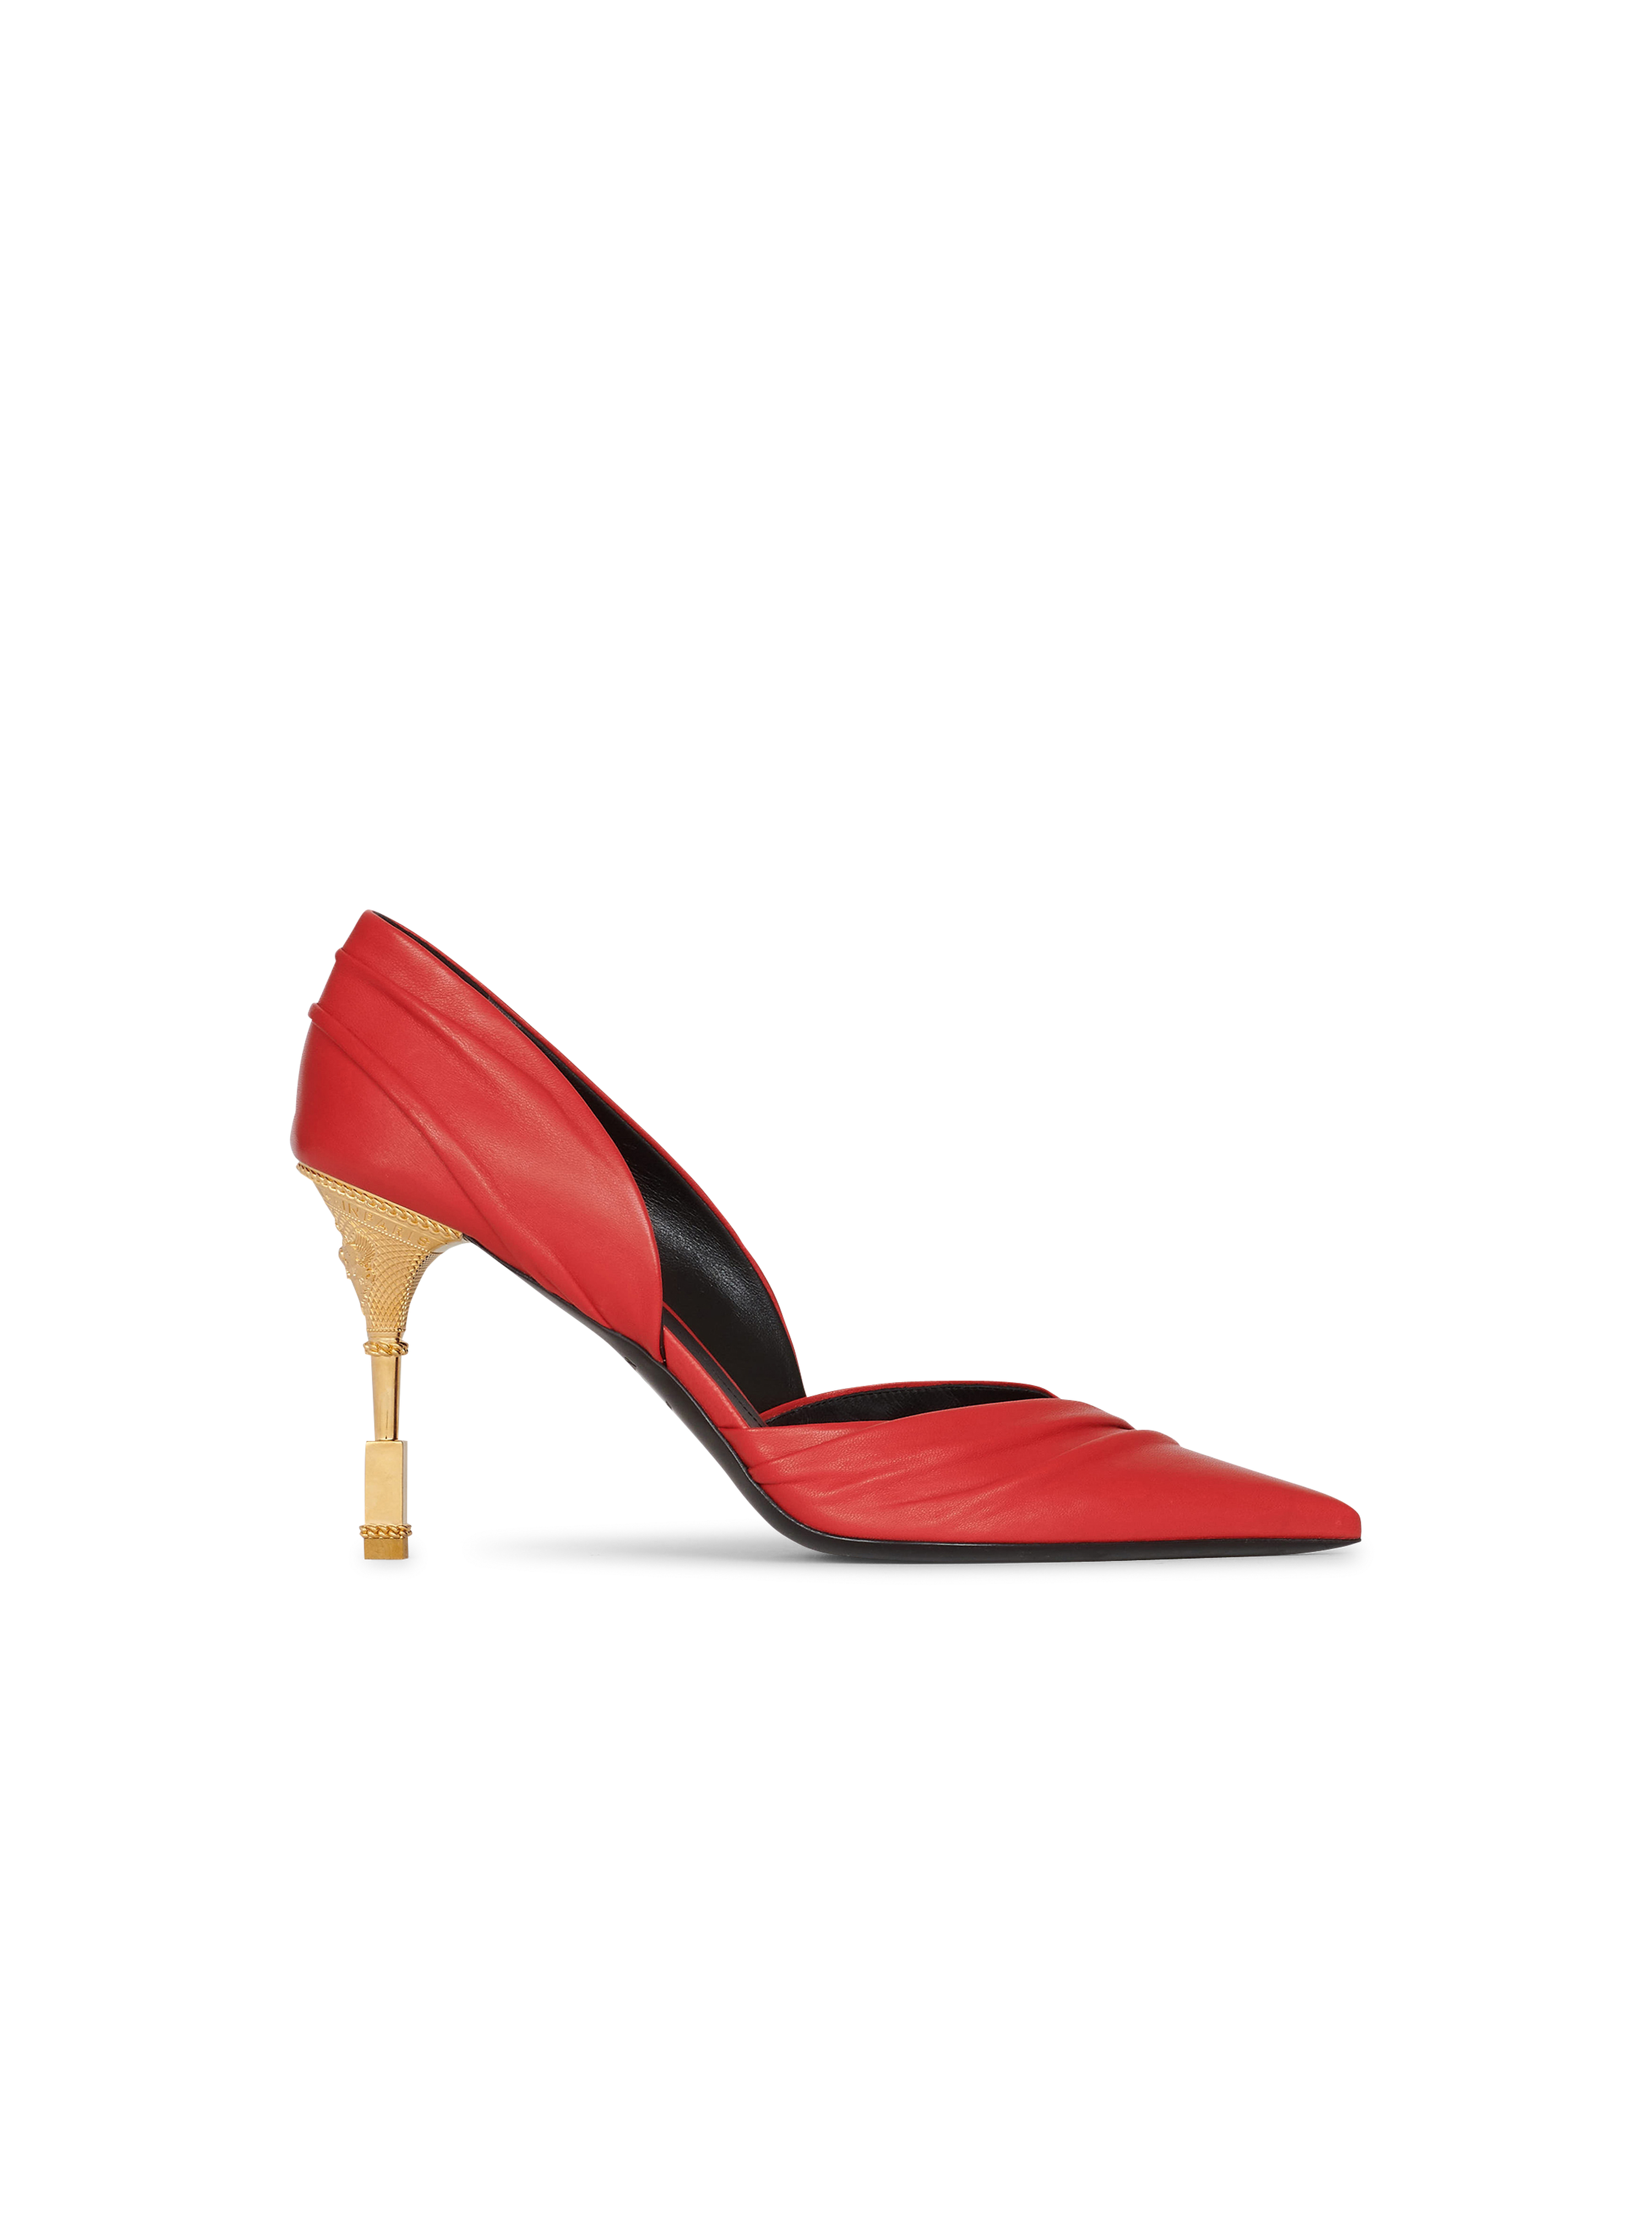 Moneta 垂褶皮革高跟鞋, red